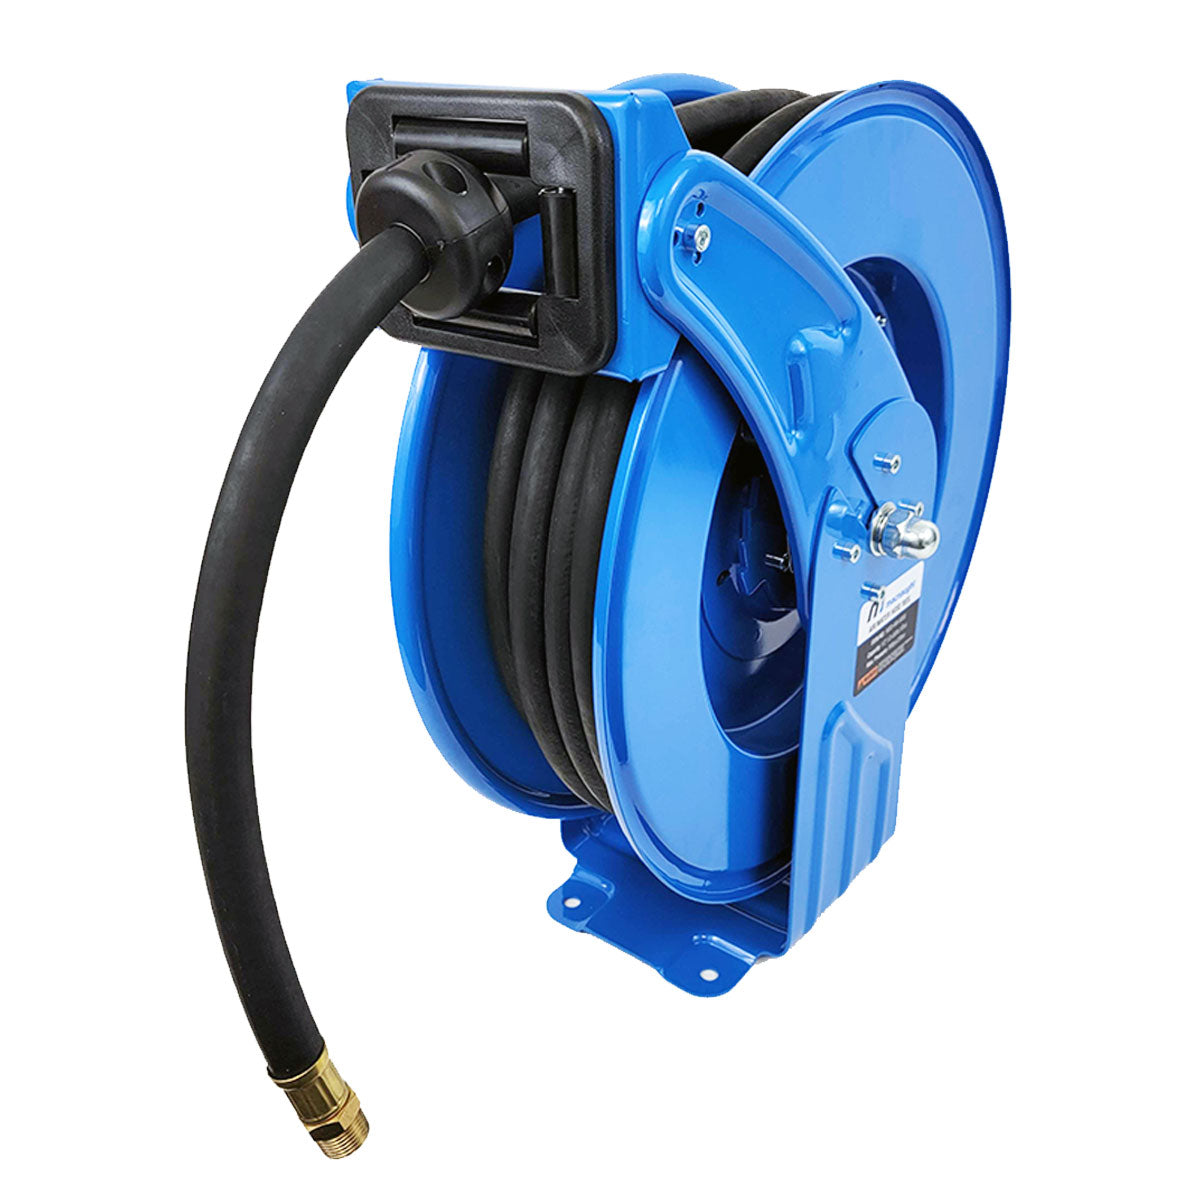 5-25M Automotive high pressure water hose reel, Automatic retractable reel